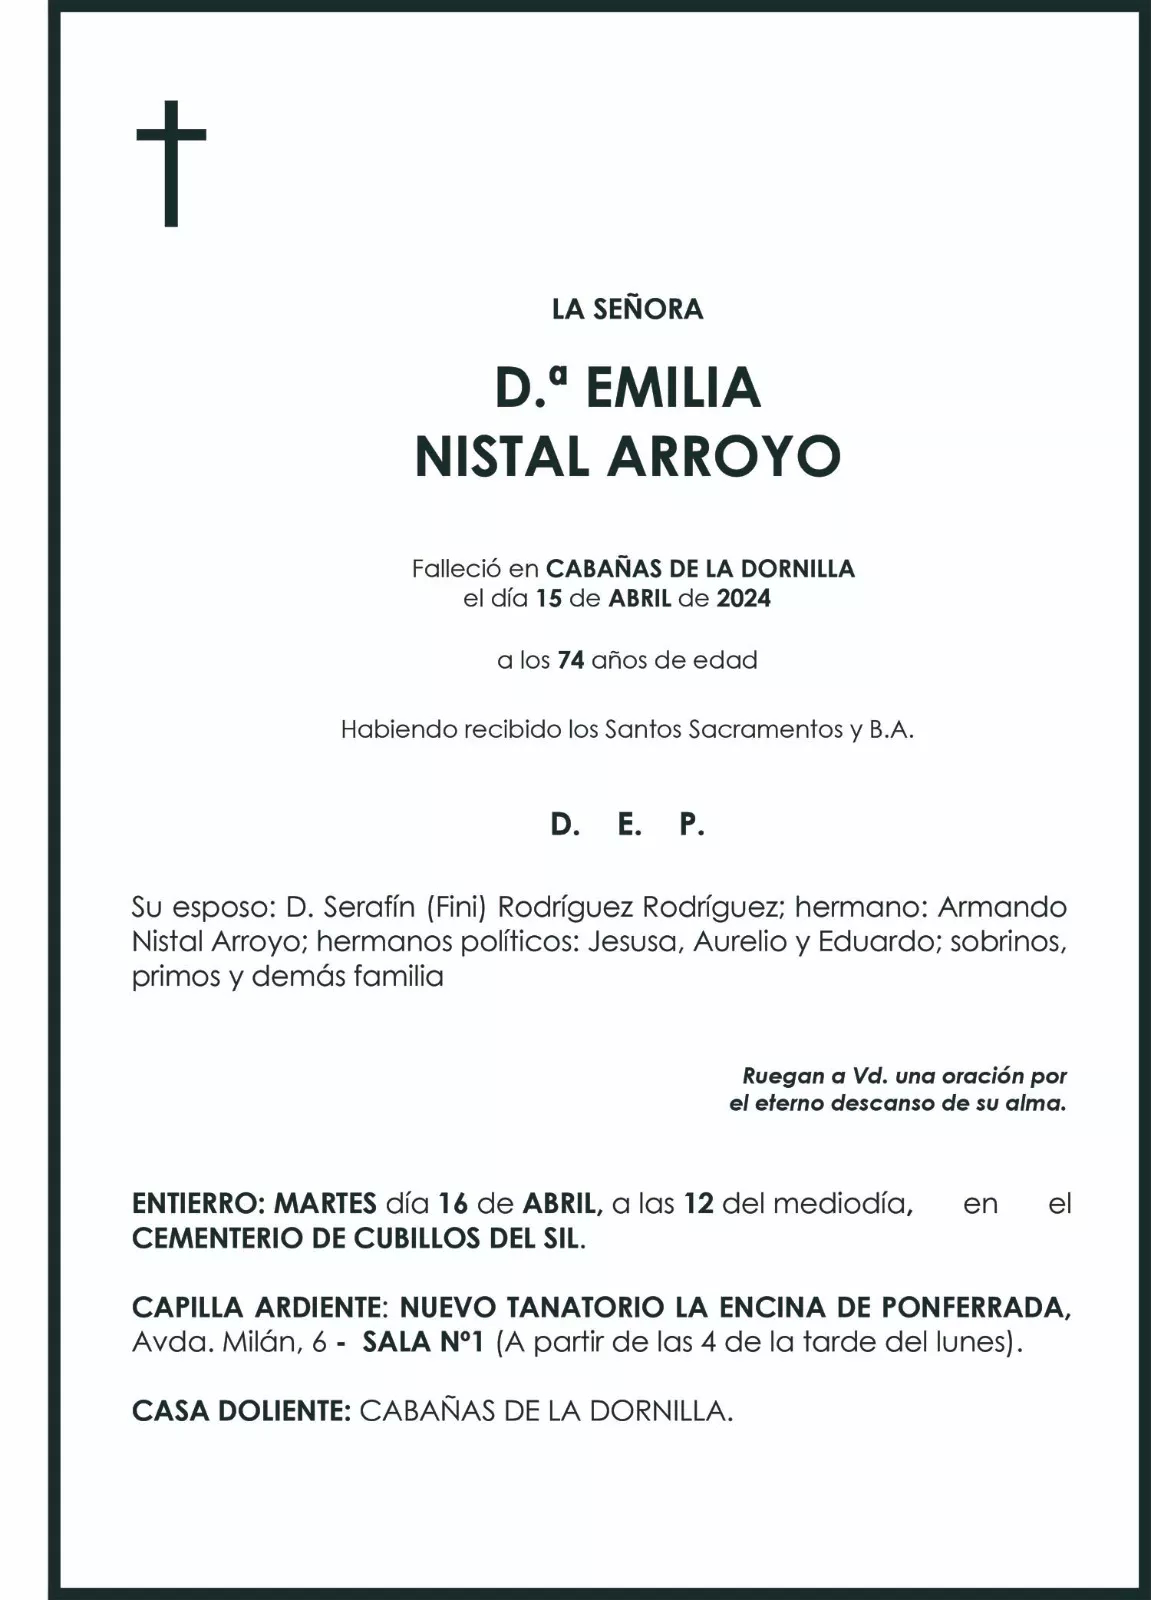 EMILIA NISTAL ARROYO